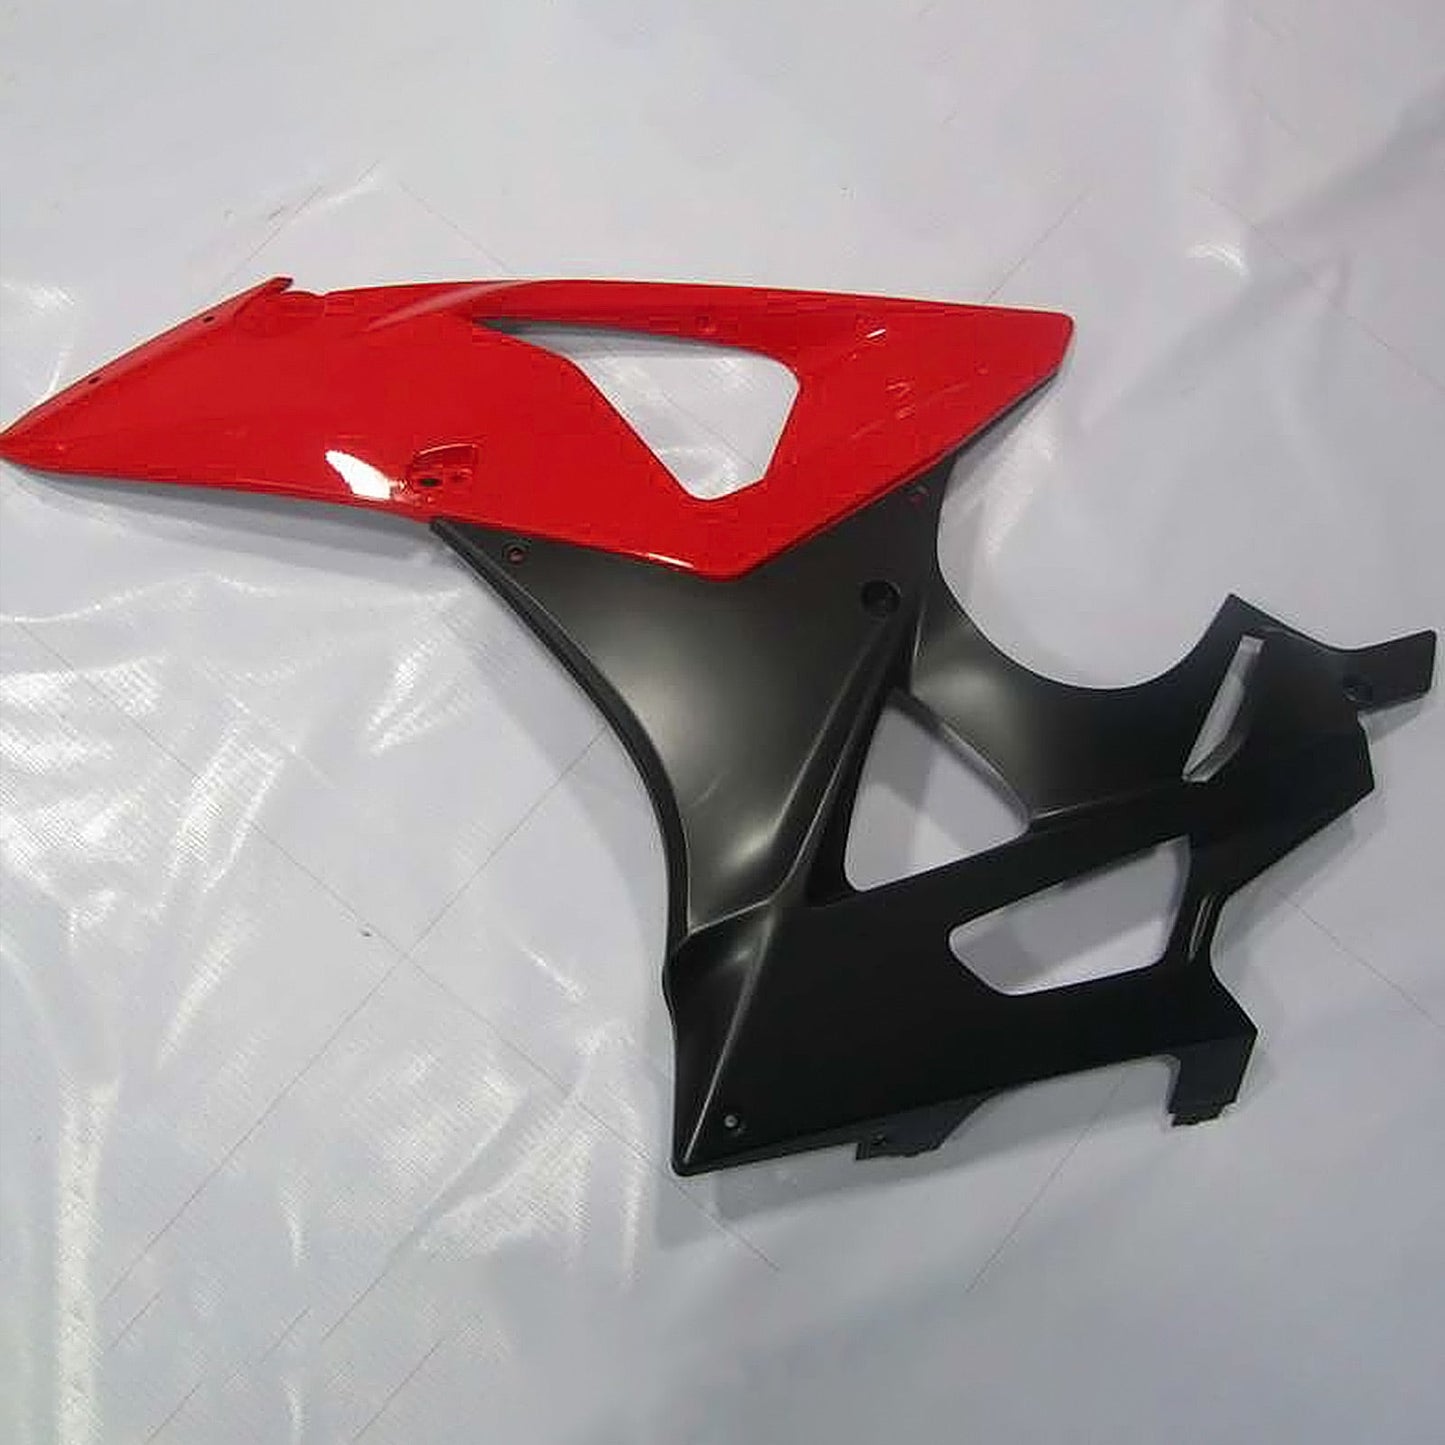 2009-2014 BMW S1000RR Amotopart Injection Fairing Kit Bodywork Plastic ABS Black Red White For